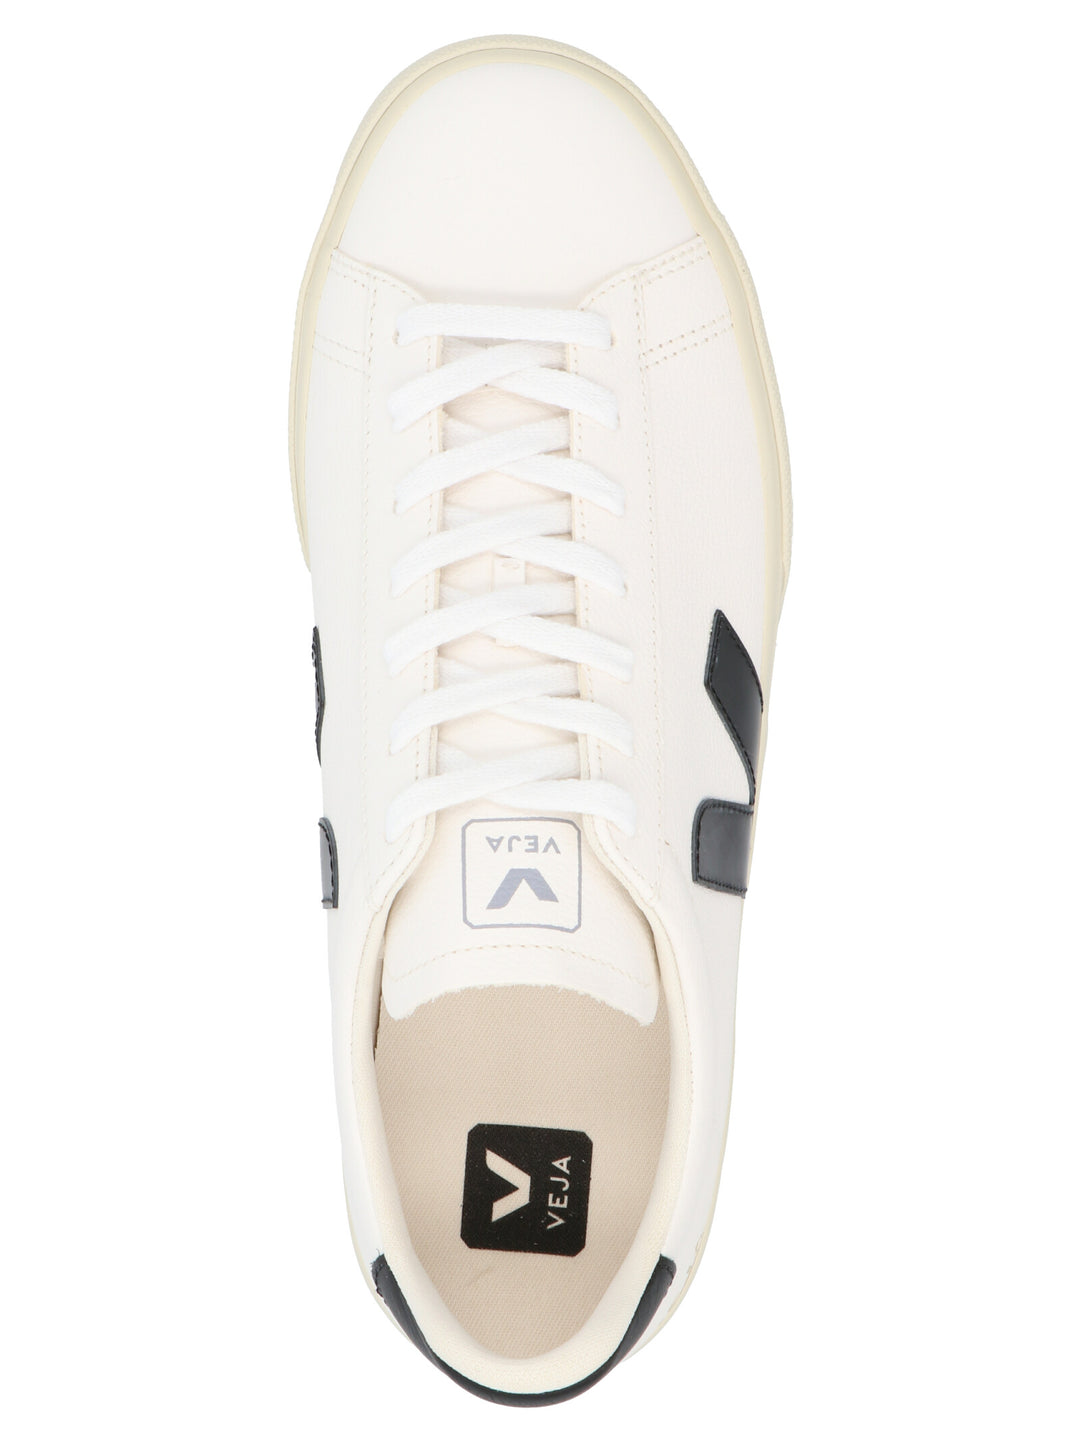 'Nova' Sneakers Bianco/nero